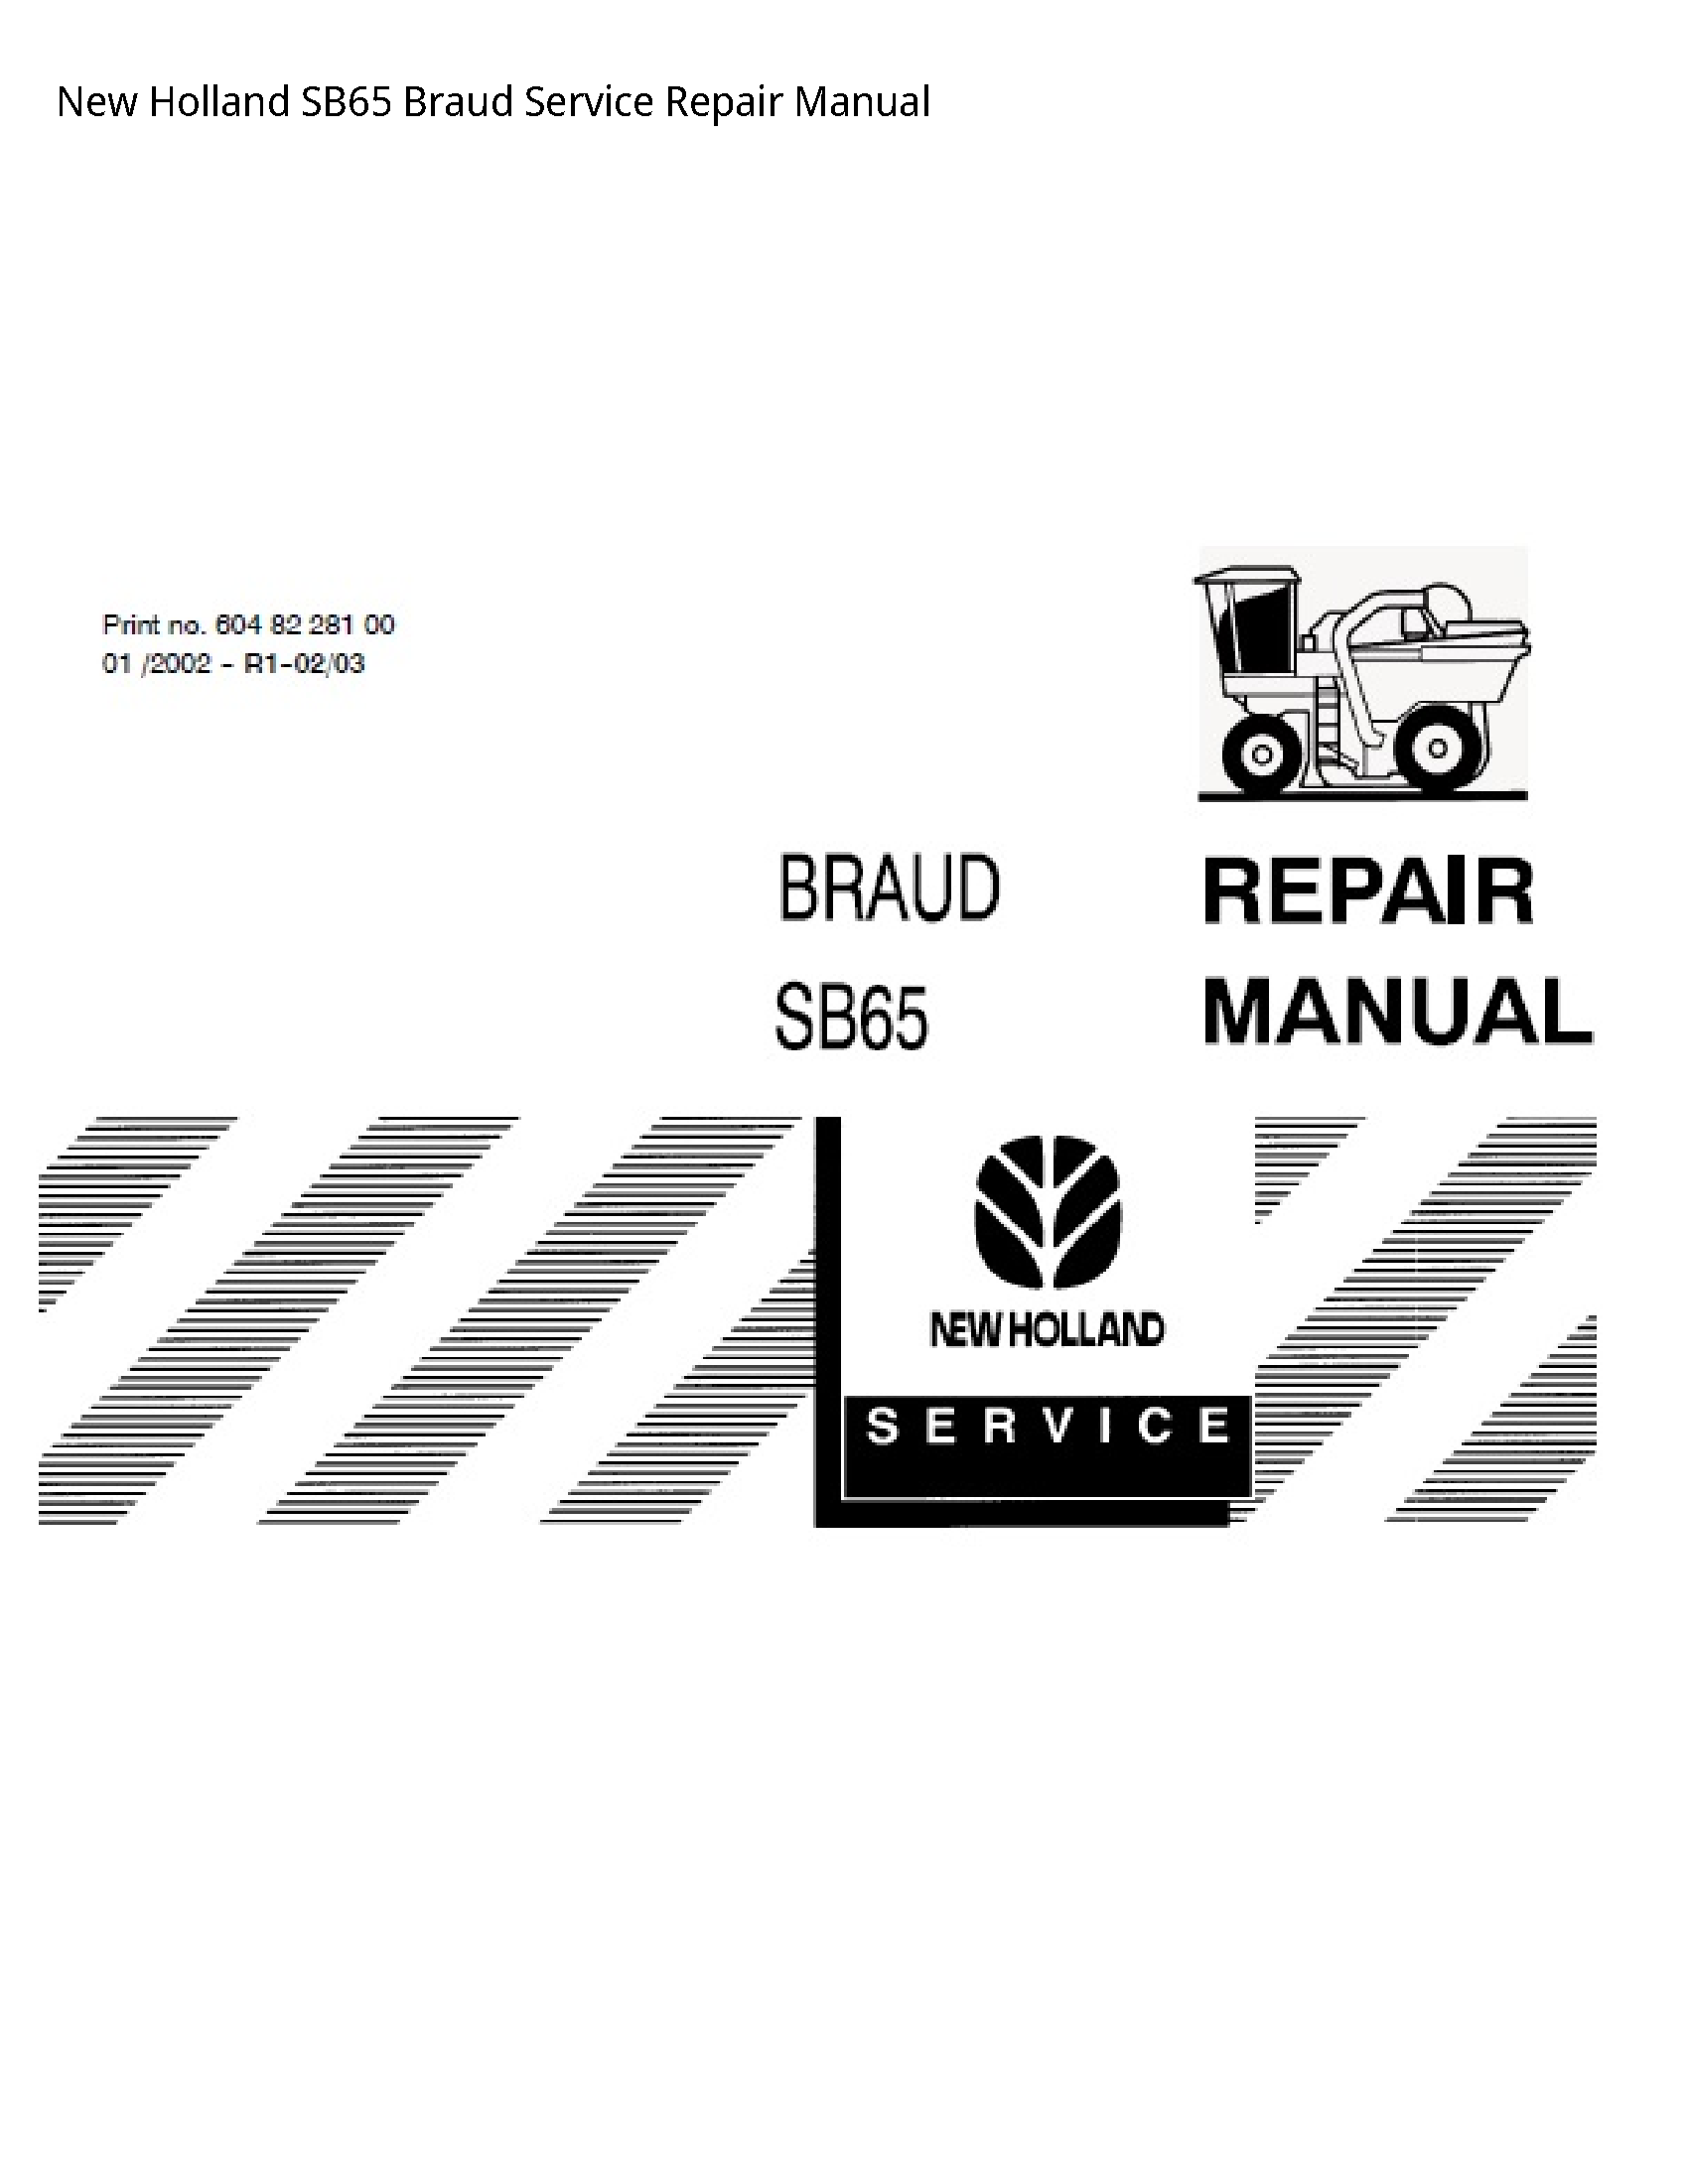 New Holland SB65 Braud manual